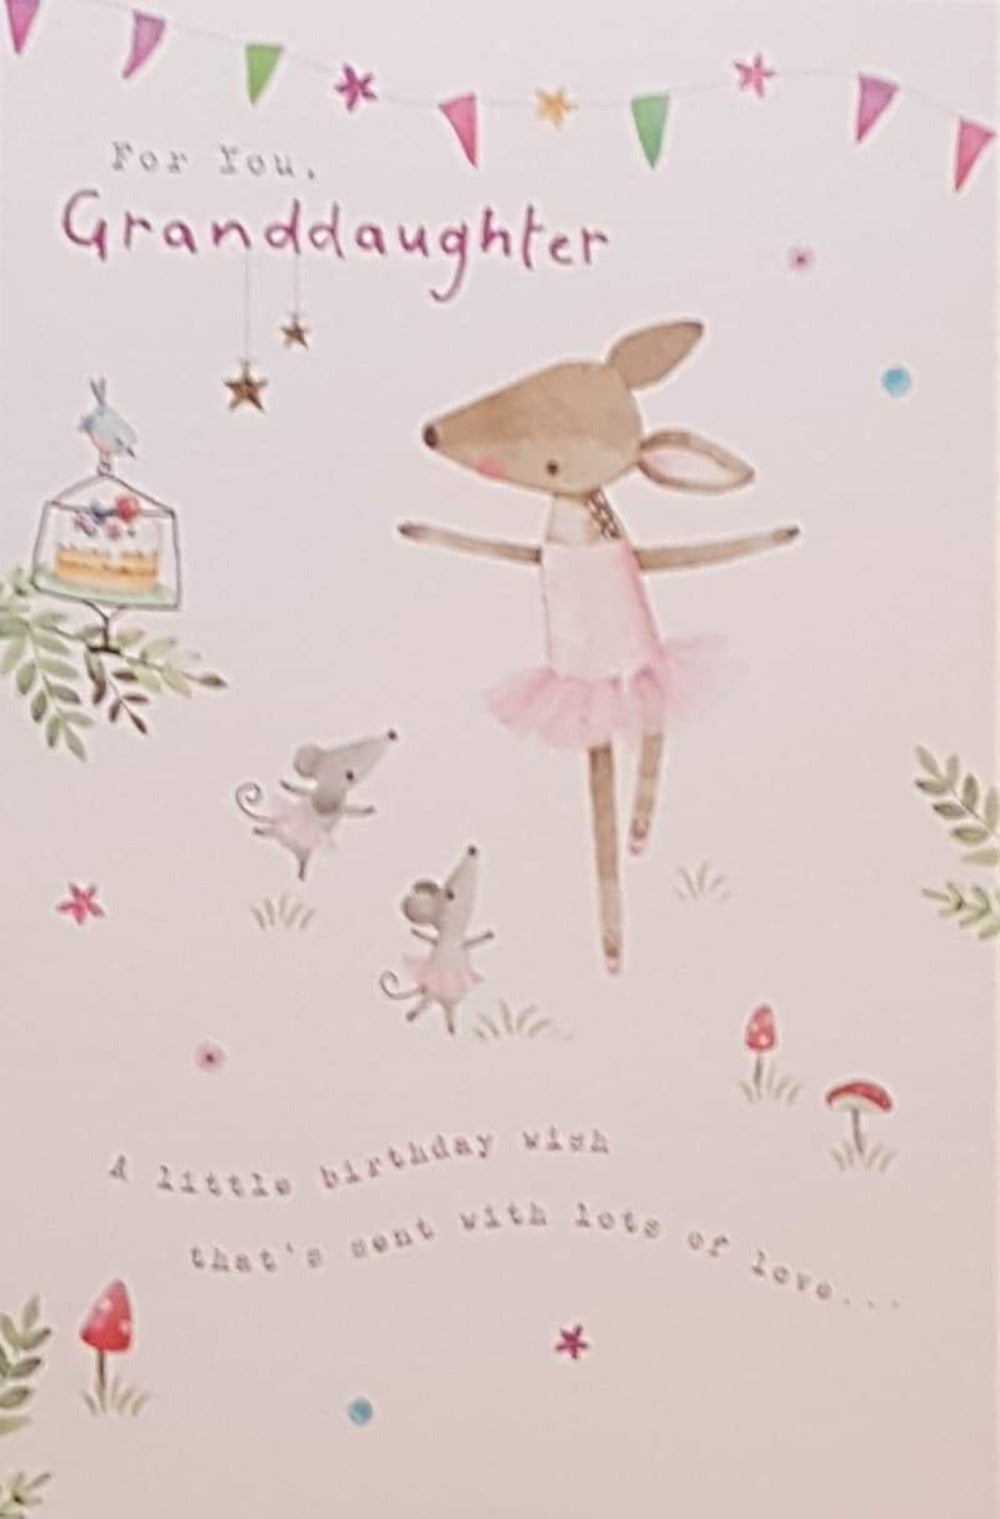 Birthday Card - Granddaughter / 'A Little Birthday Wish' & A Red Cone Mushroom